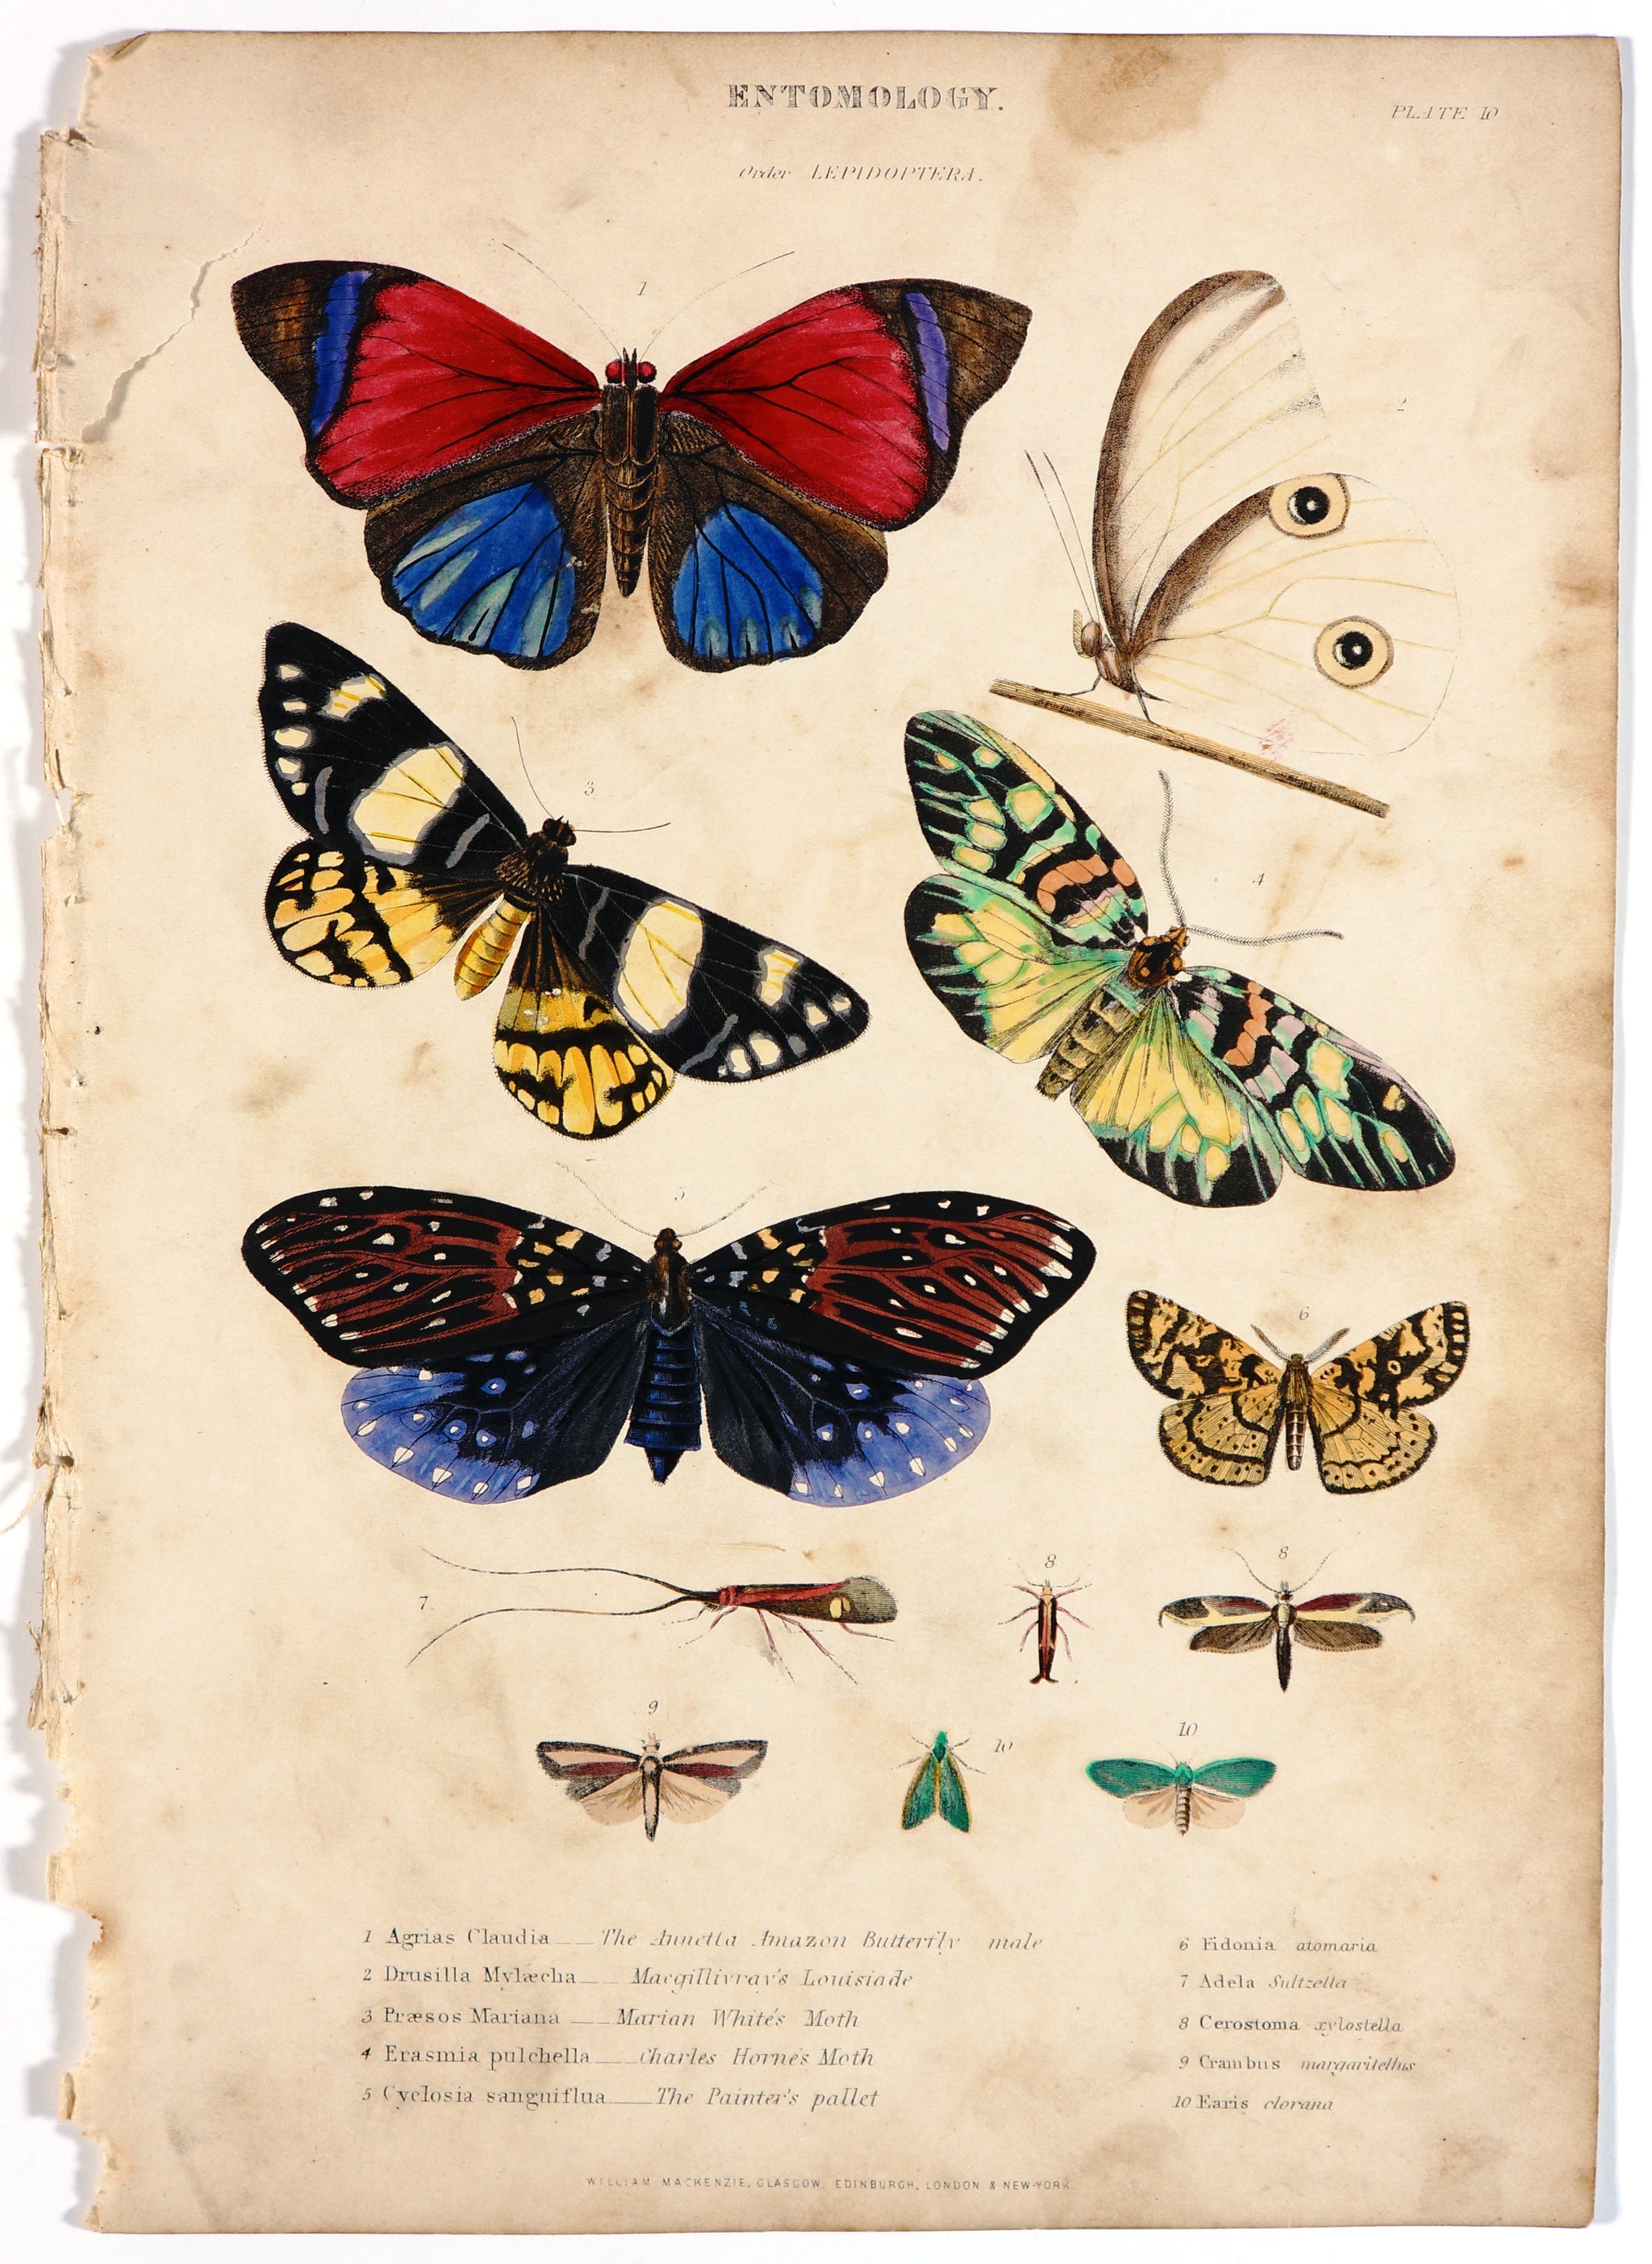 Authentic Vintage Antique Print  Annetta , Painter's Pallet & Other  Butterflies Engraving